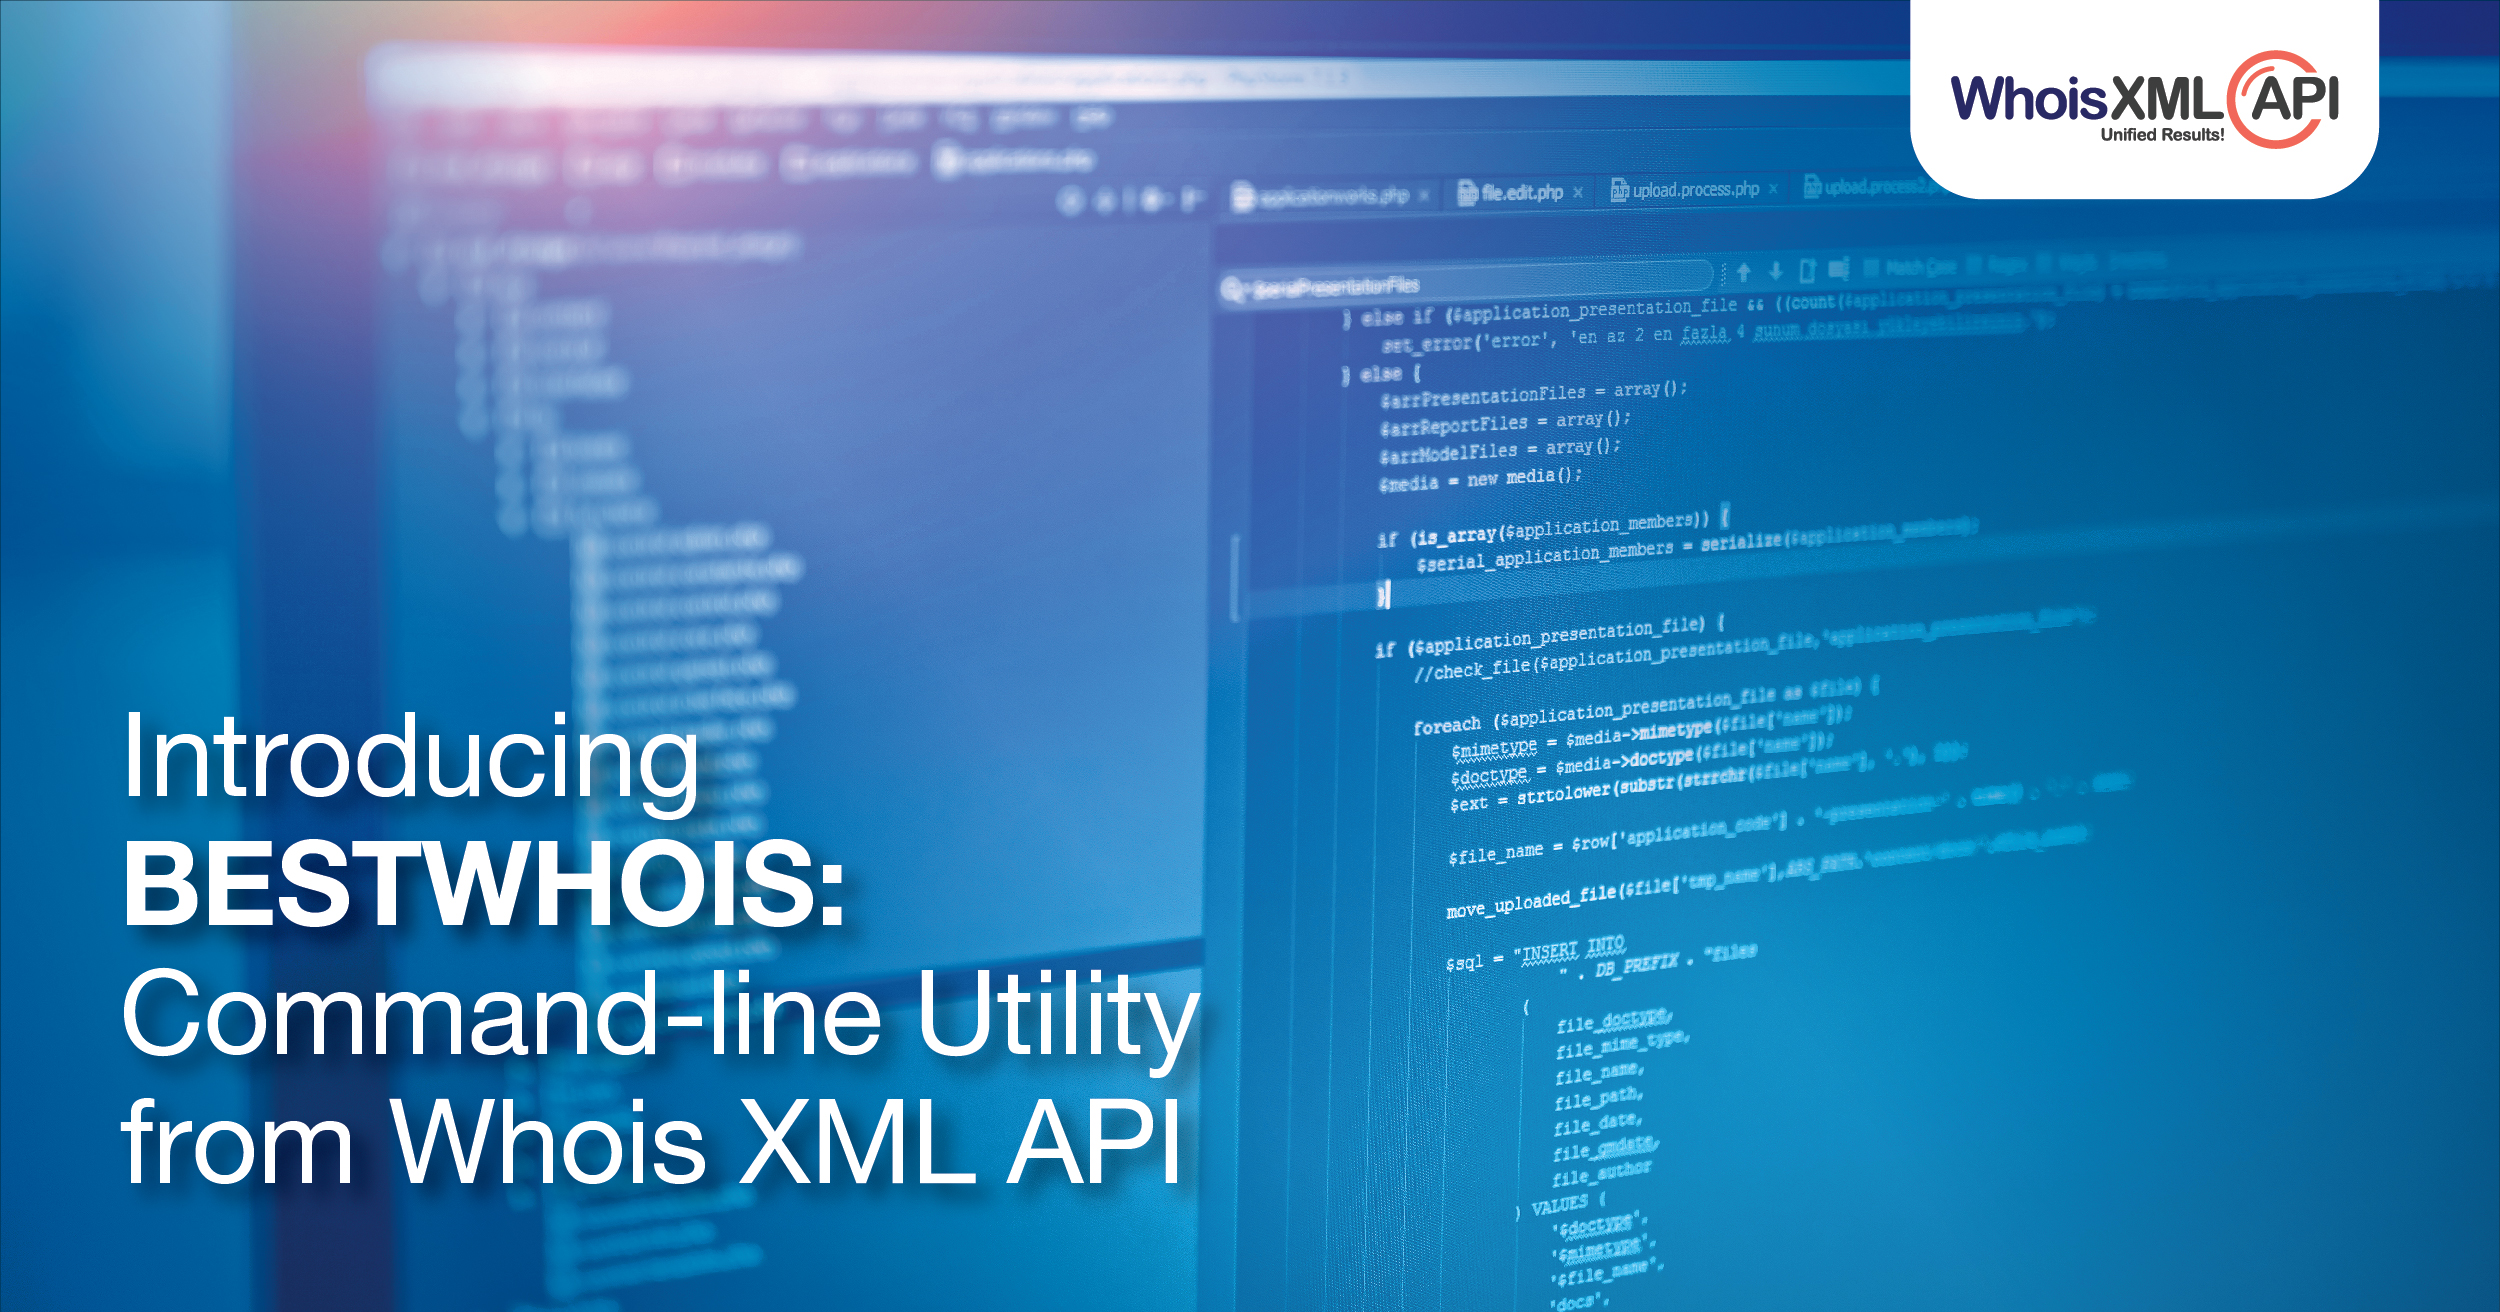 Access Whois XML APIs hallmark real-time & historic Whois via a cross-platform command-line utility, “bestwhois”.